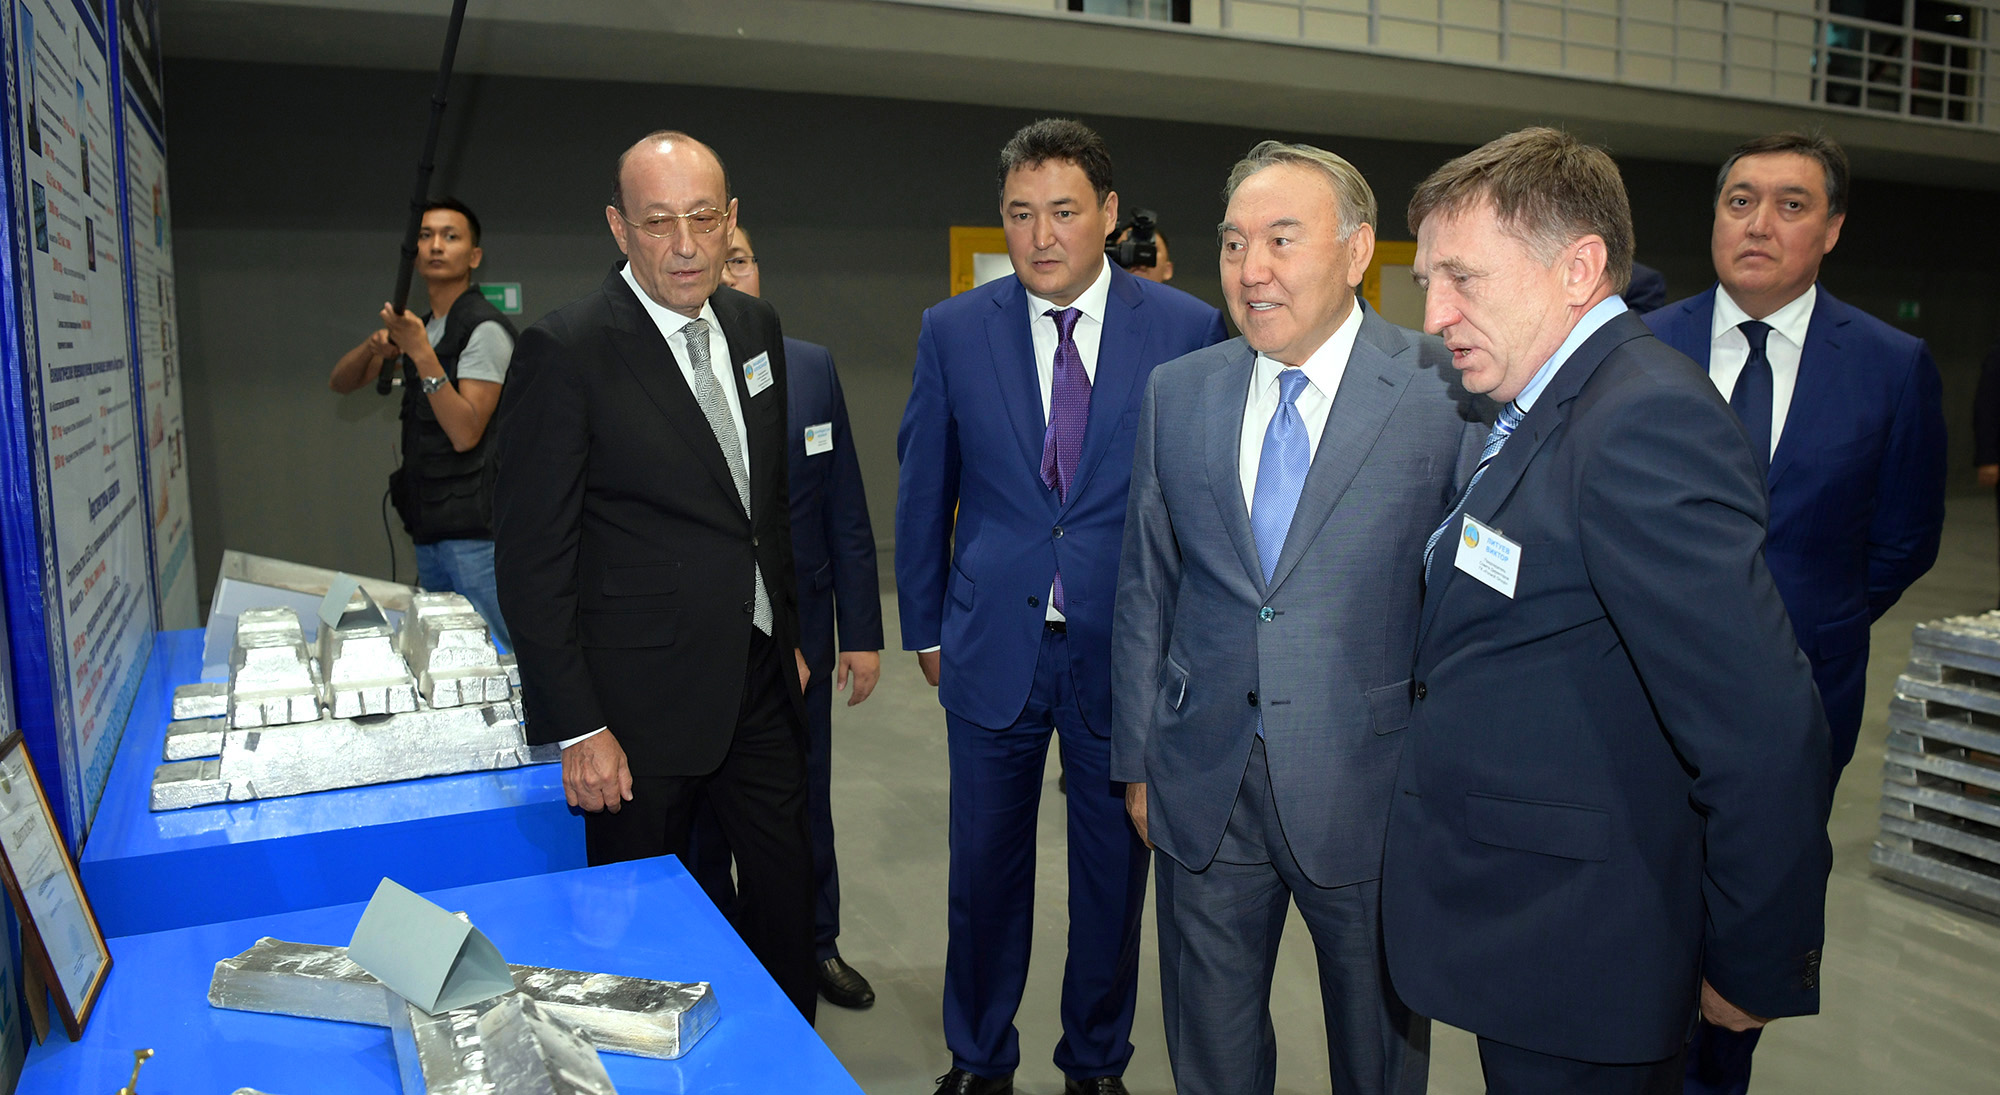 Kazakh President visits GiessenHaus LLP